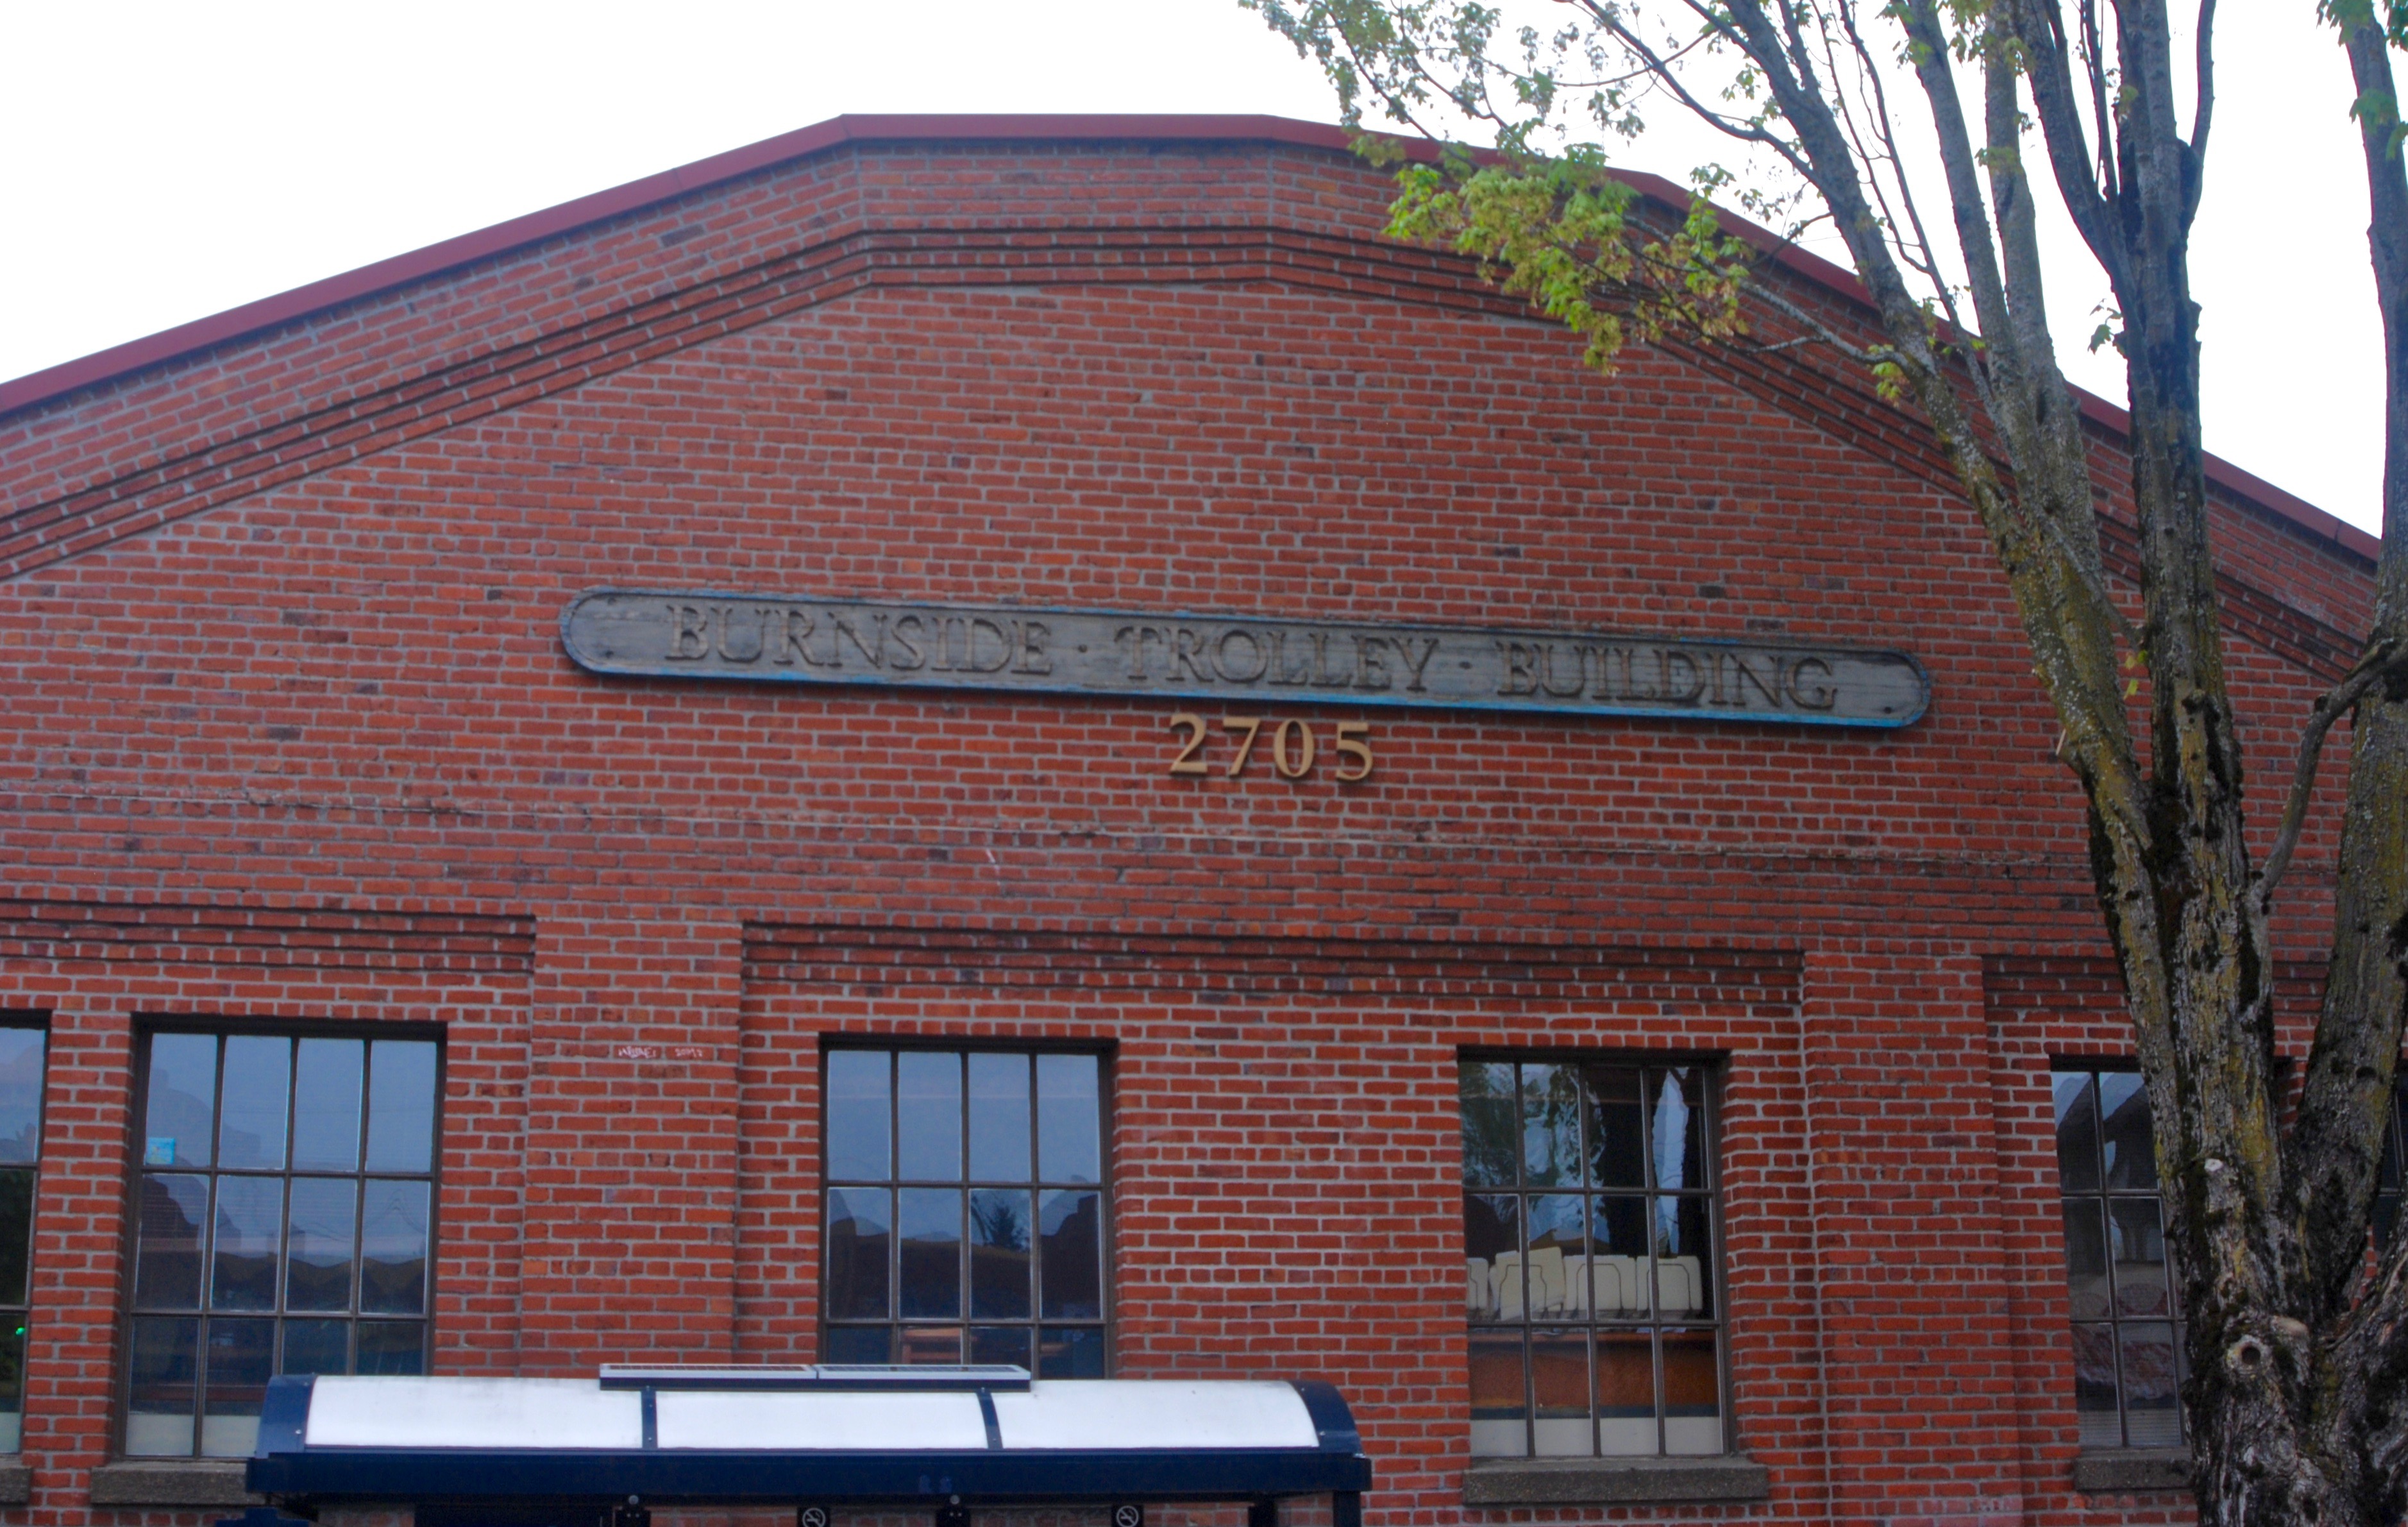 File:Burnside Trolley Building (former carhouse) in 2015 - Portland, OR.jpg  - Wikimedia Commons